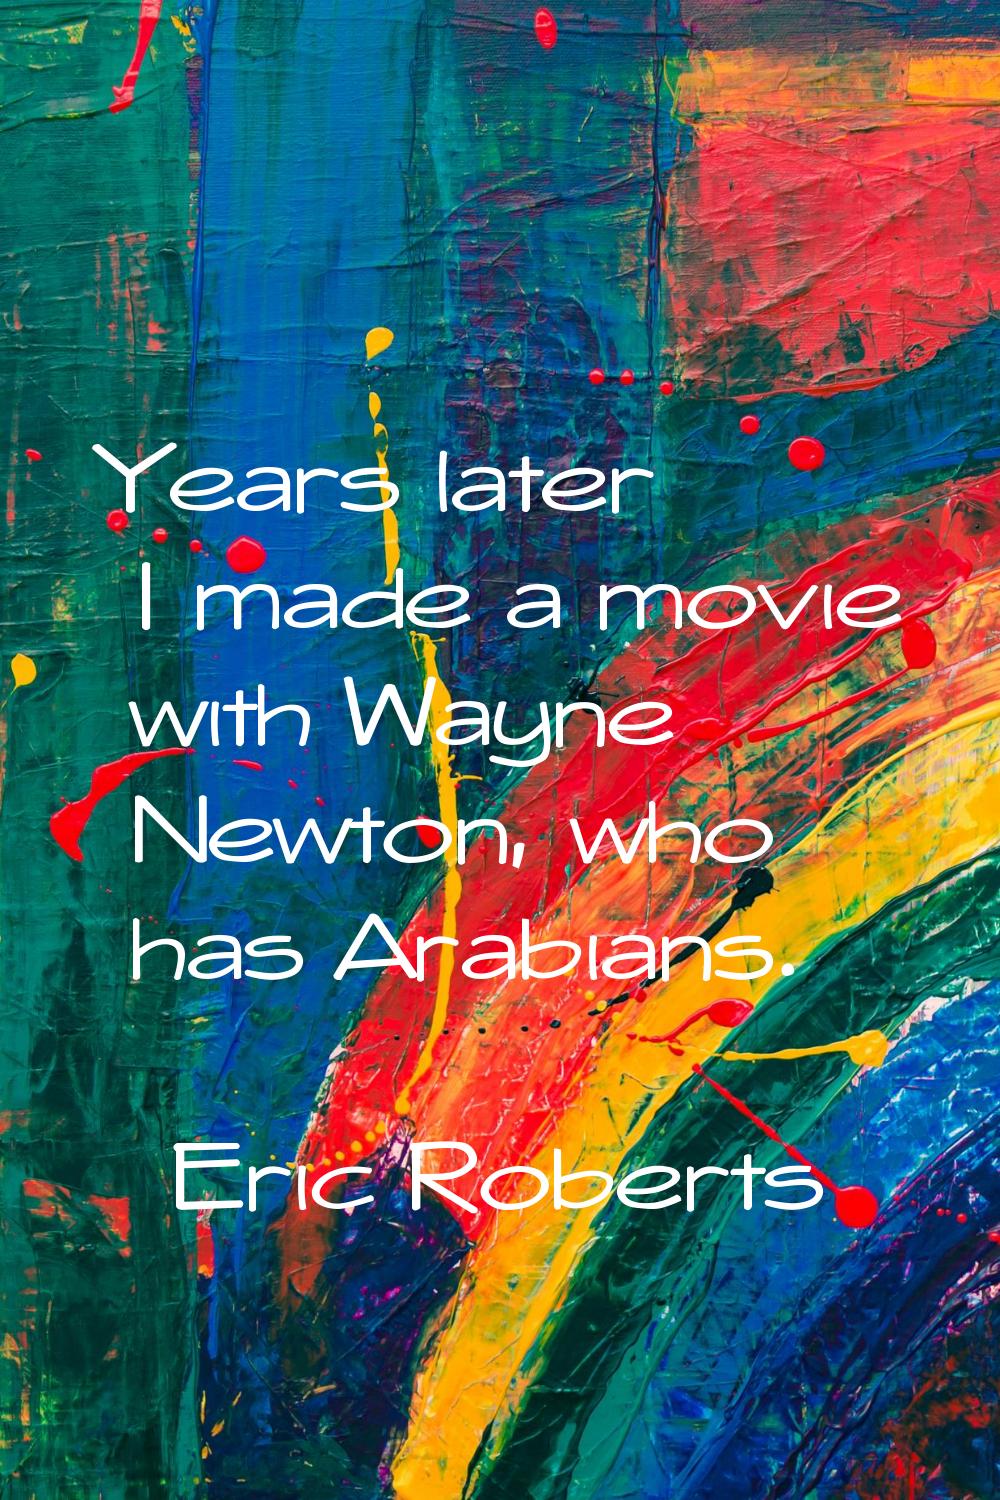 Years later I made a movie with Wayne Newton, who has Arabians.